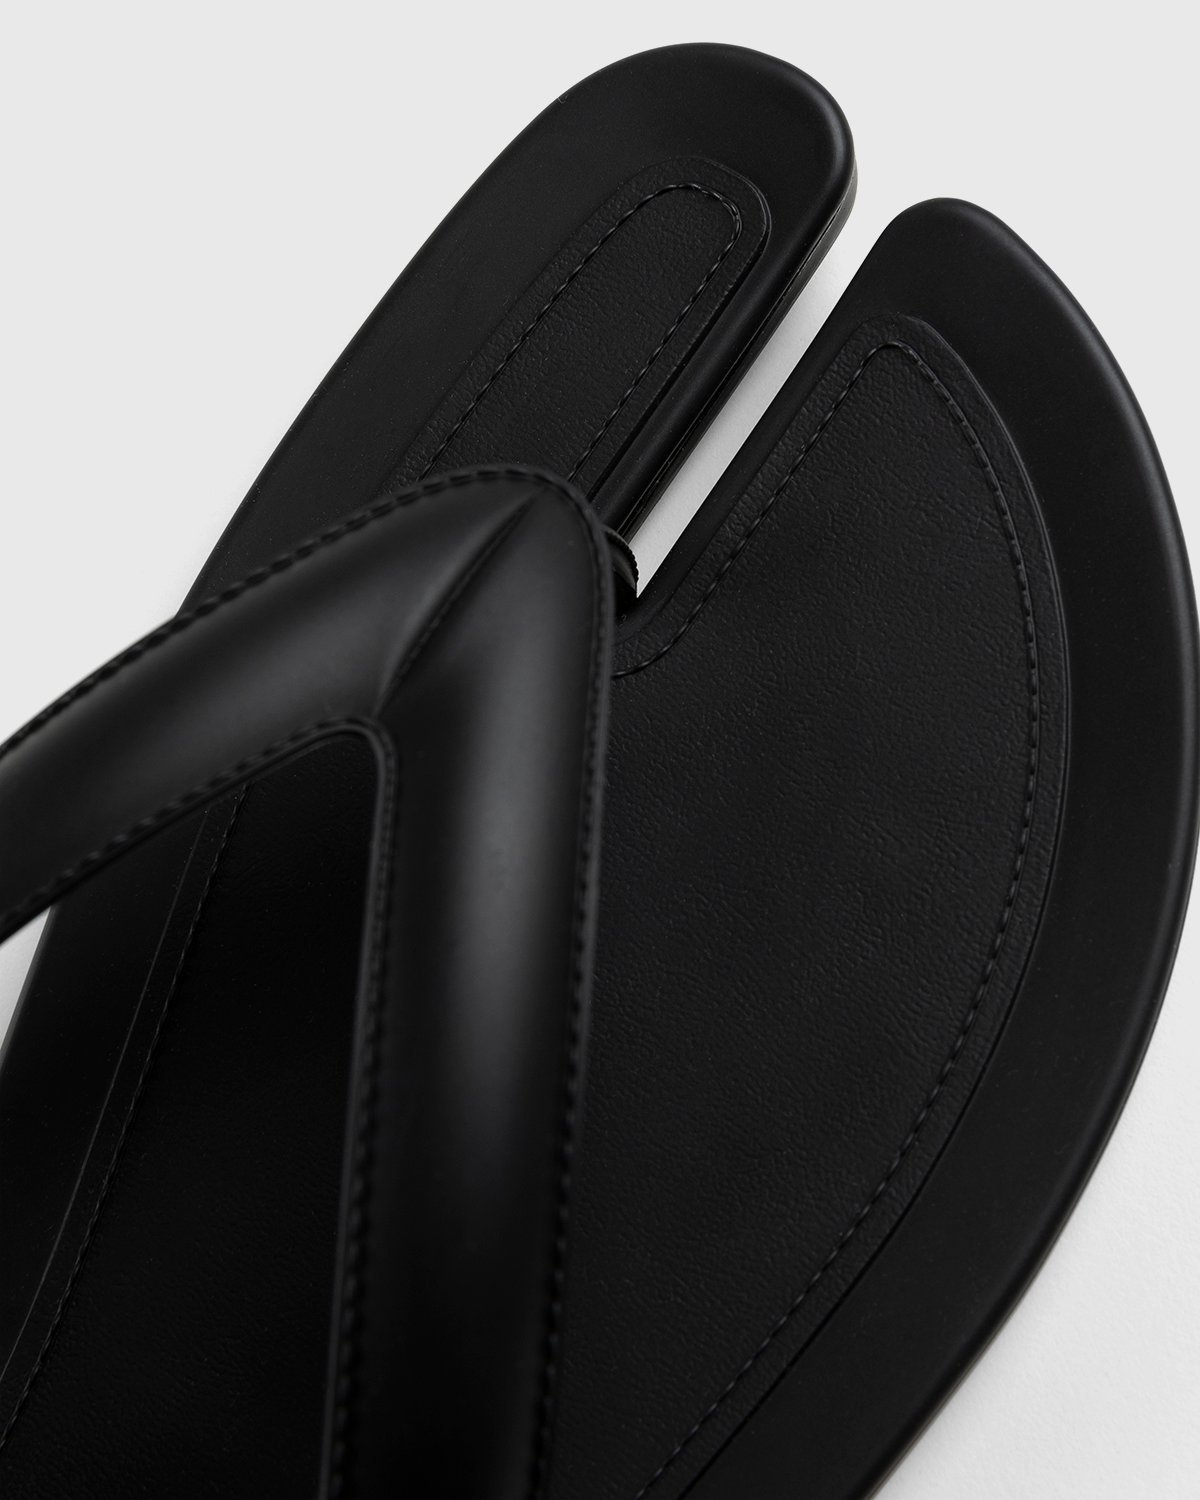 Maison Margiela - Tabi Flip-Flops Black - Footwear - Black - Image 5